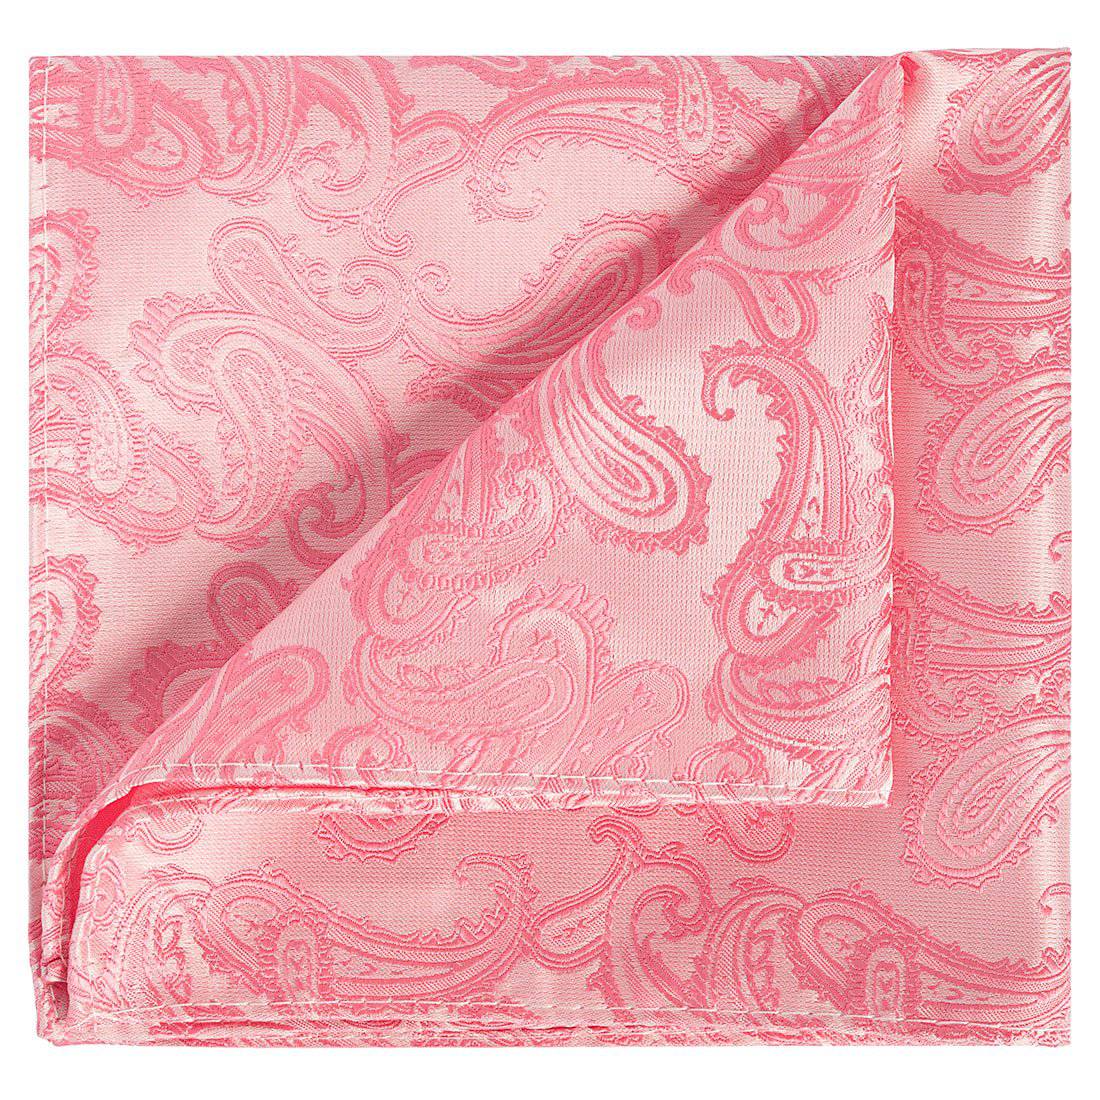 Tickle Me Pink on White Paisley Pocket Square - Tie, bowtie, pocket square  | Kissties